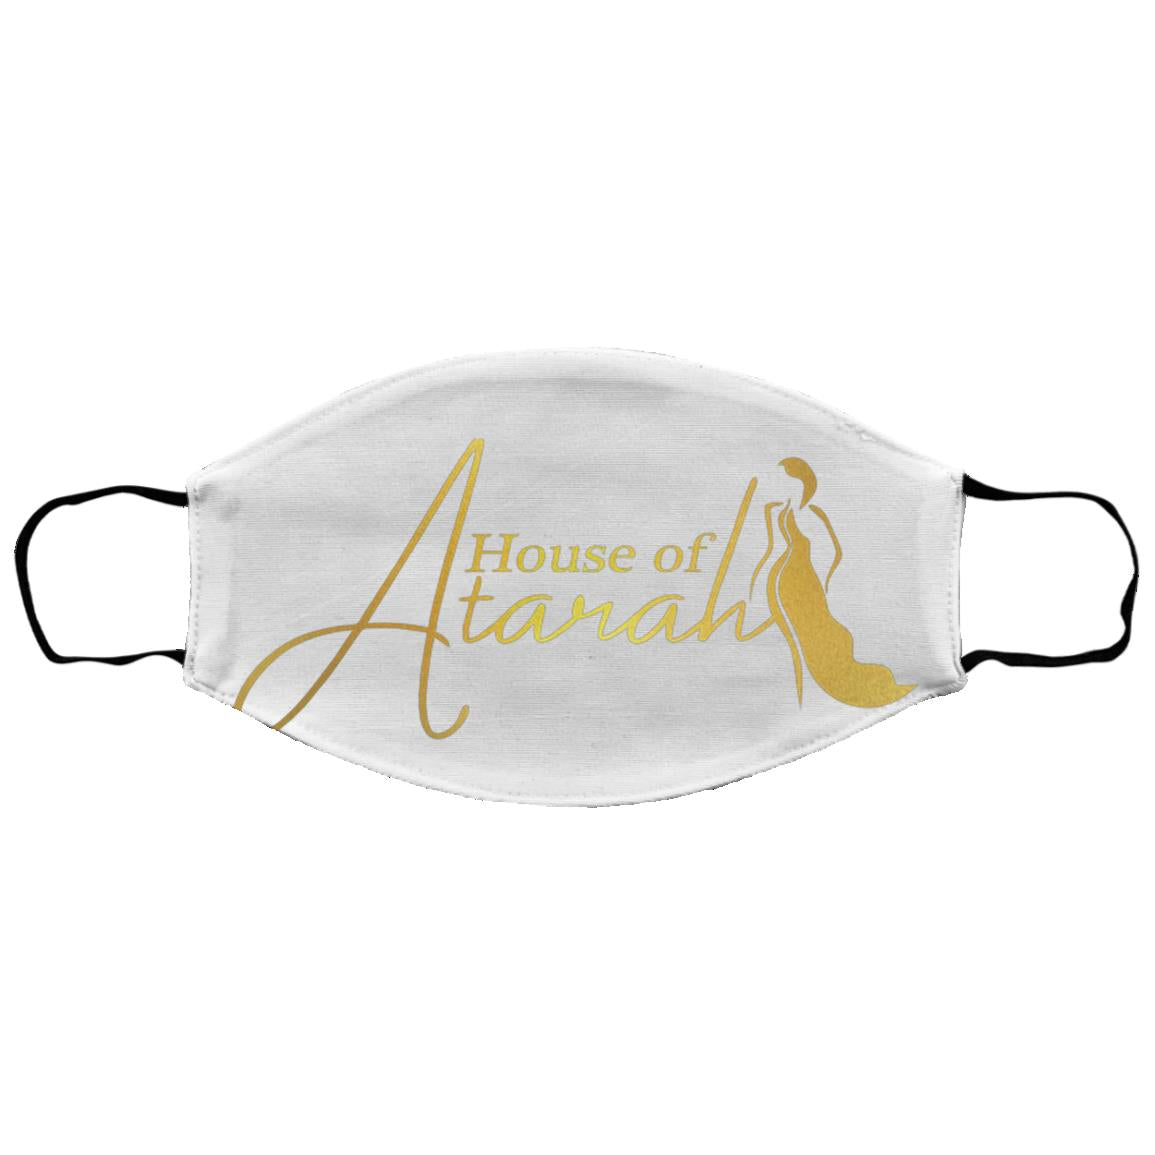 House of Atarah logo House of Atarah Sm/Med Face Mask